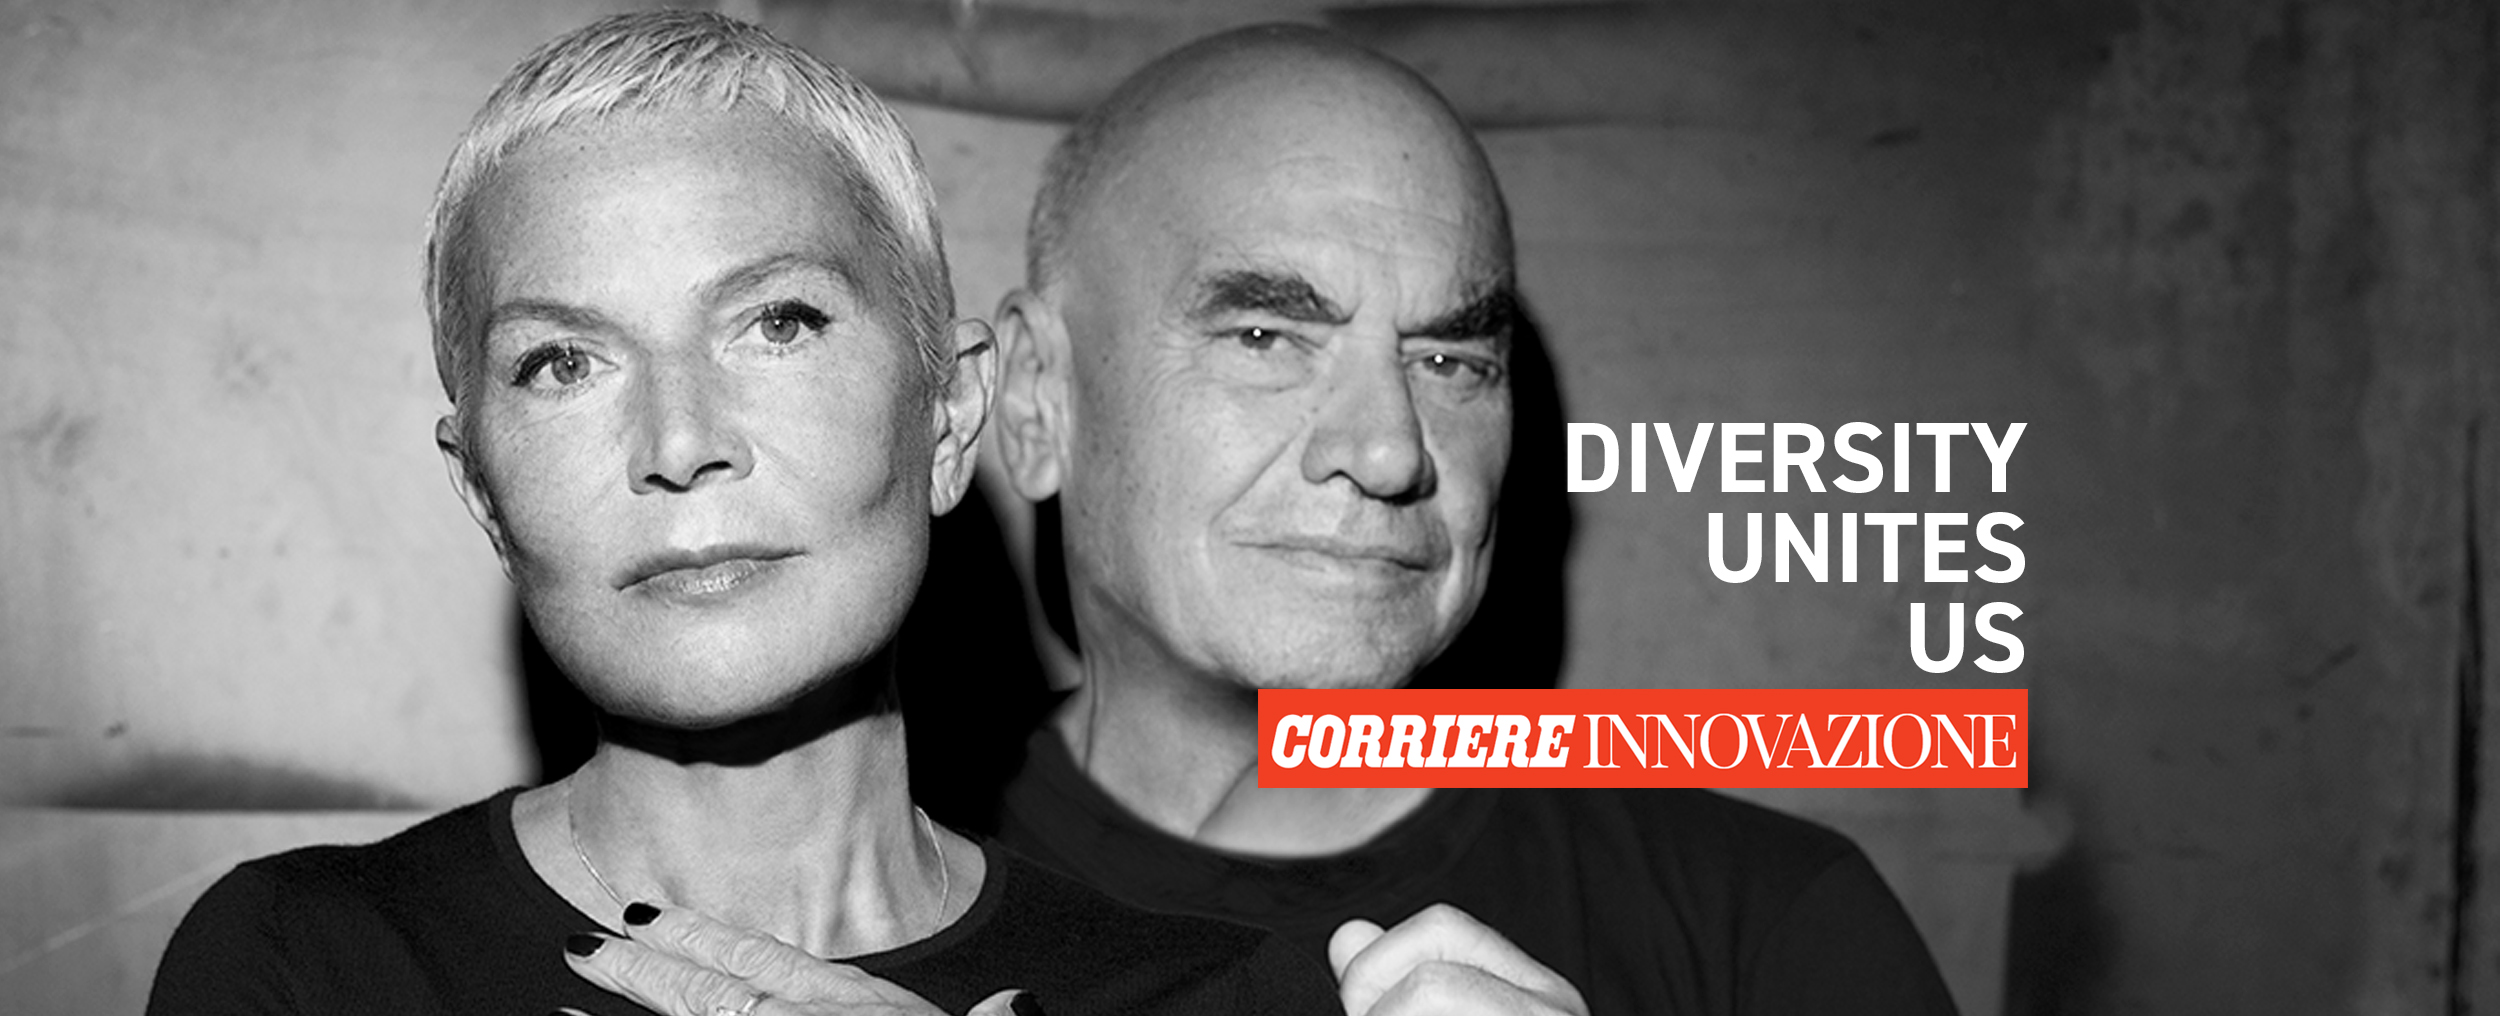 “Diversity unites us” interview on Corriere Innovazione2020, December 18